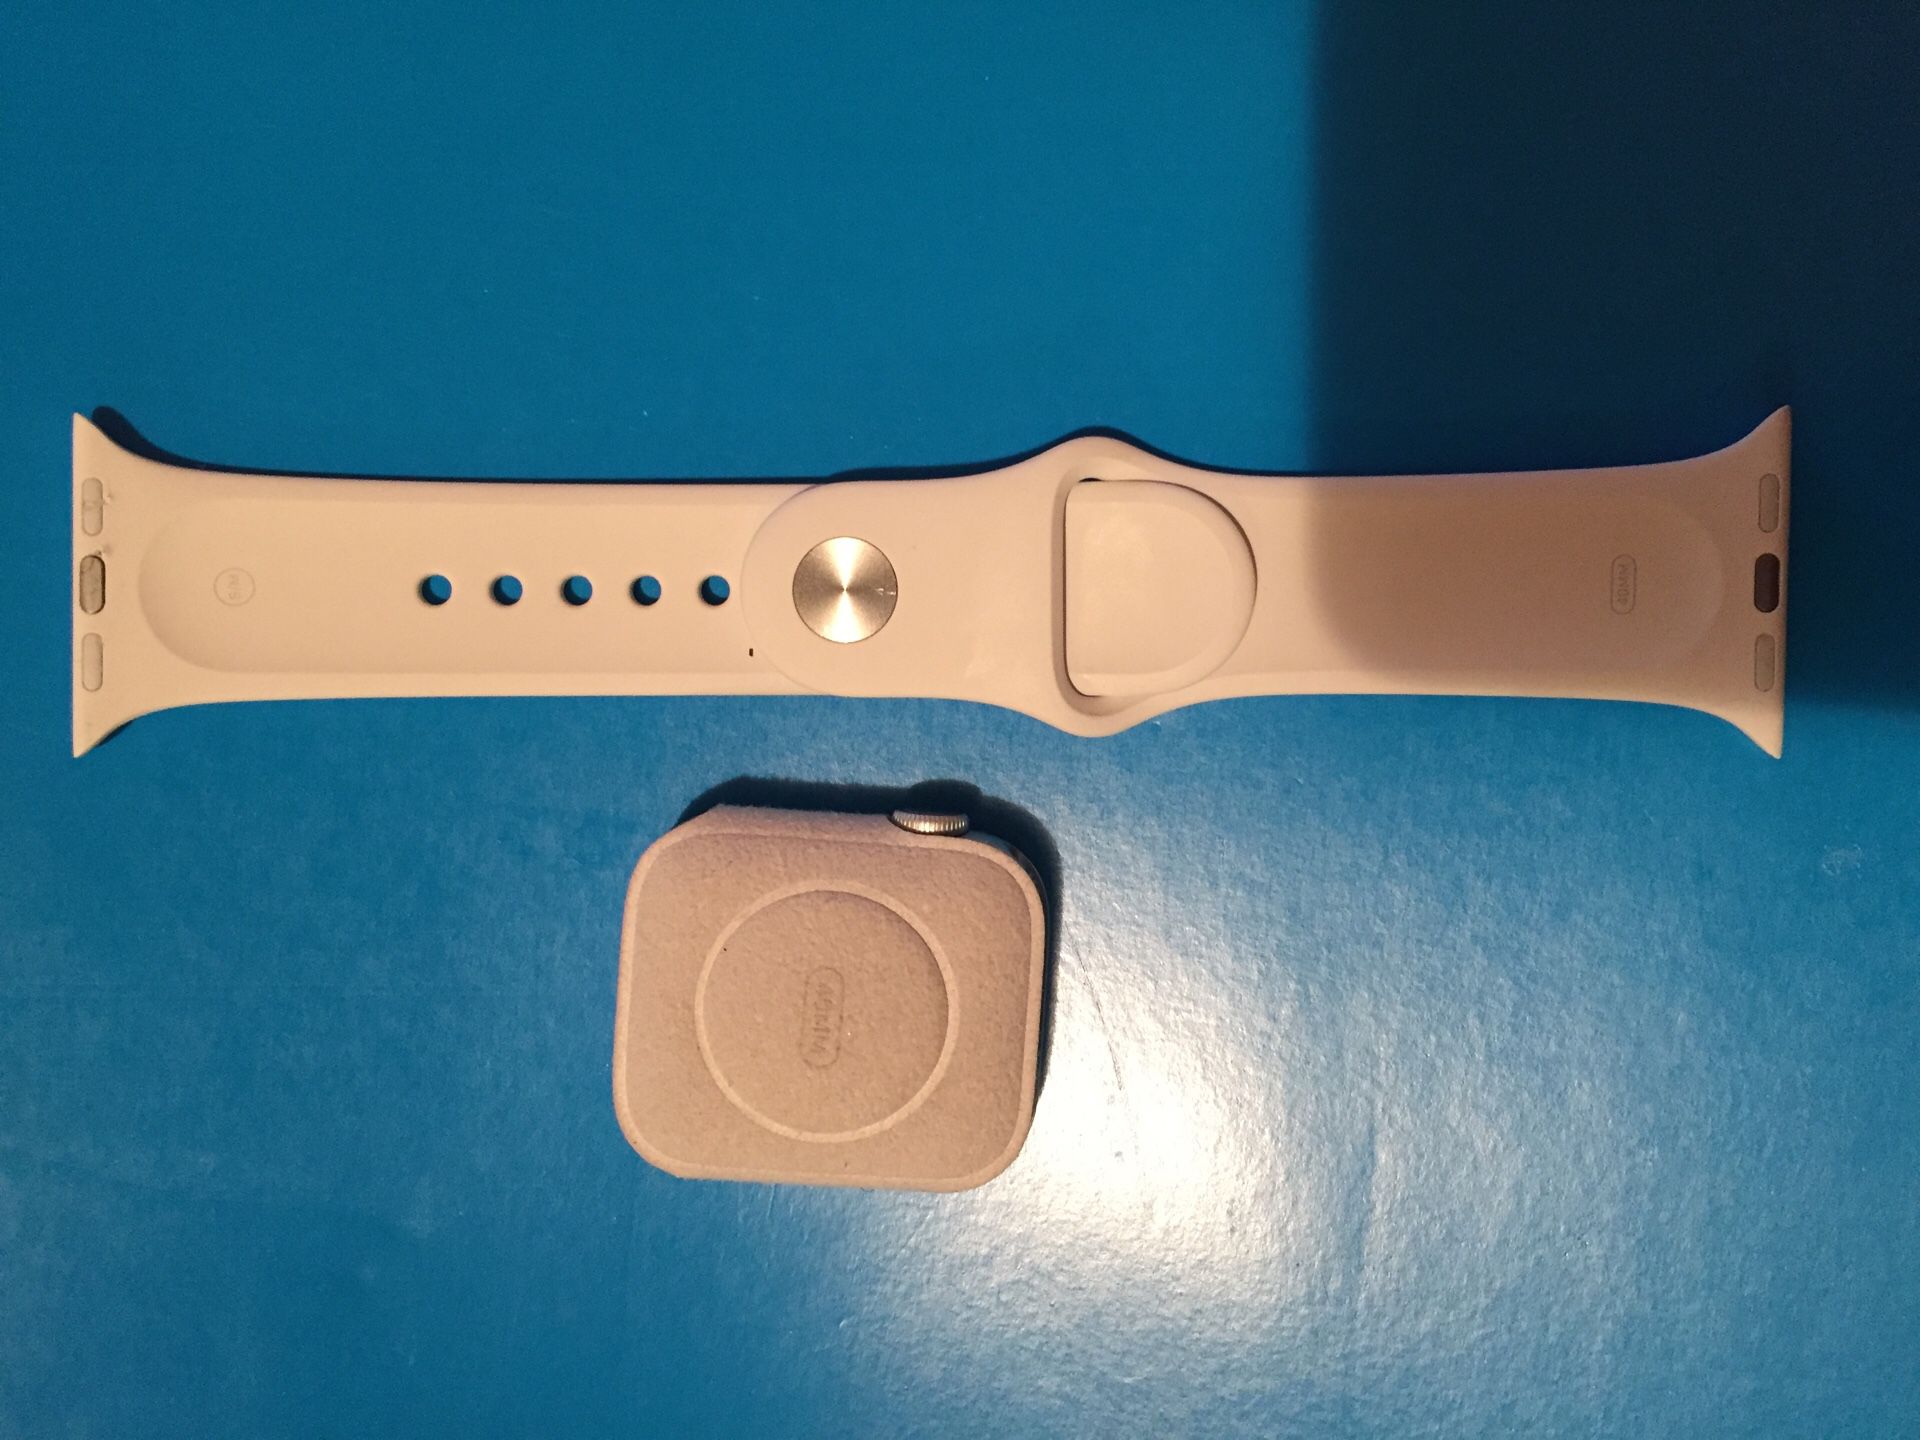 Apple Watch series 5 brand new